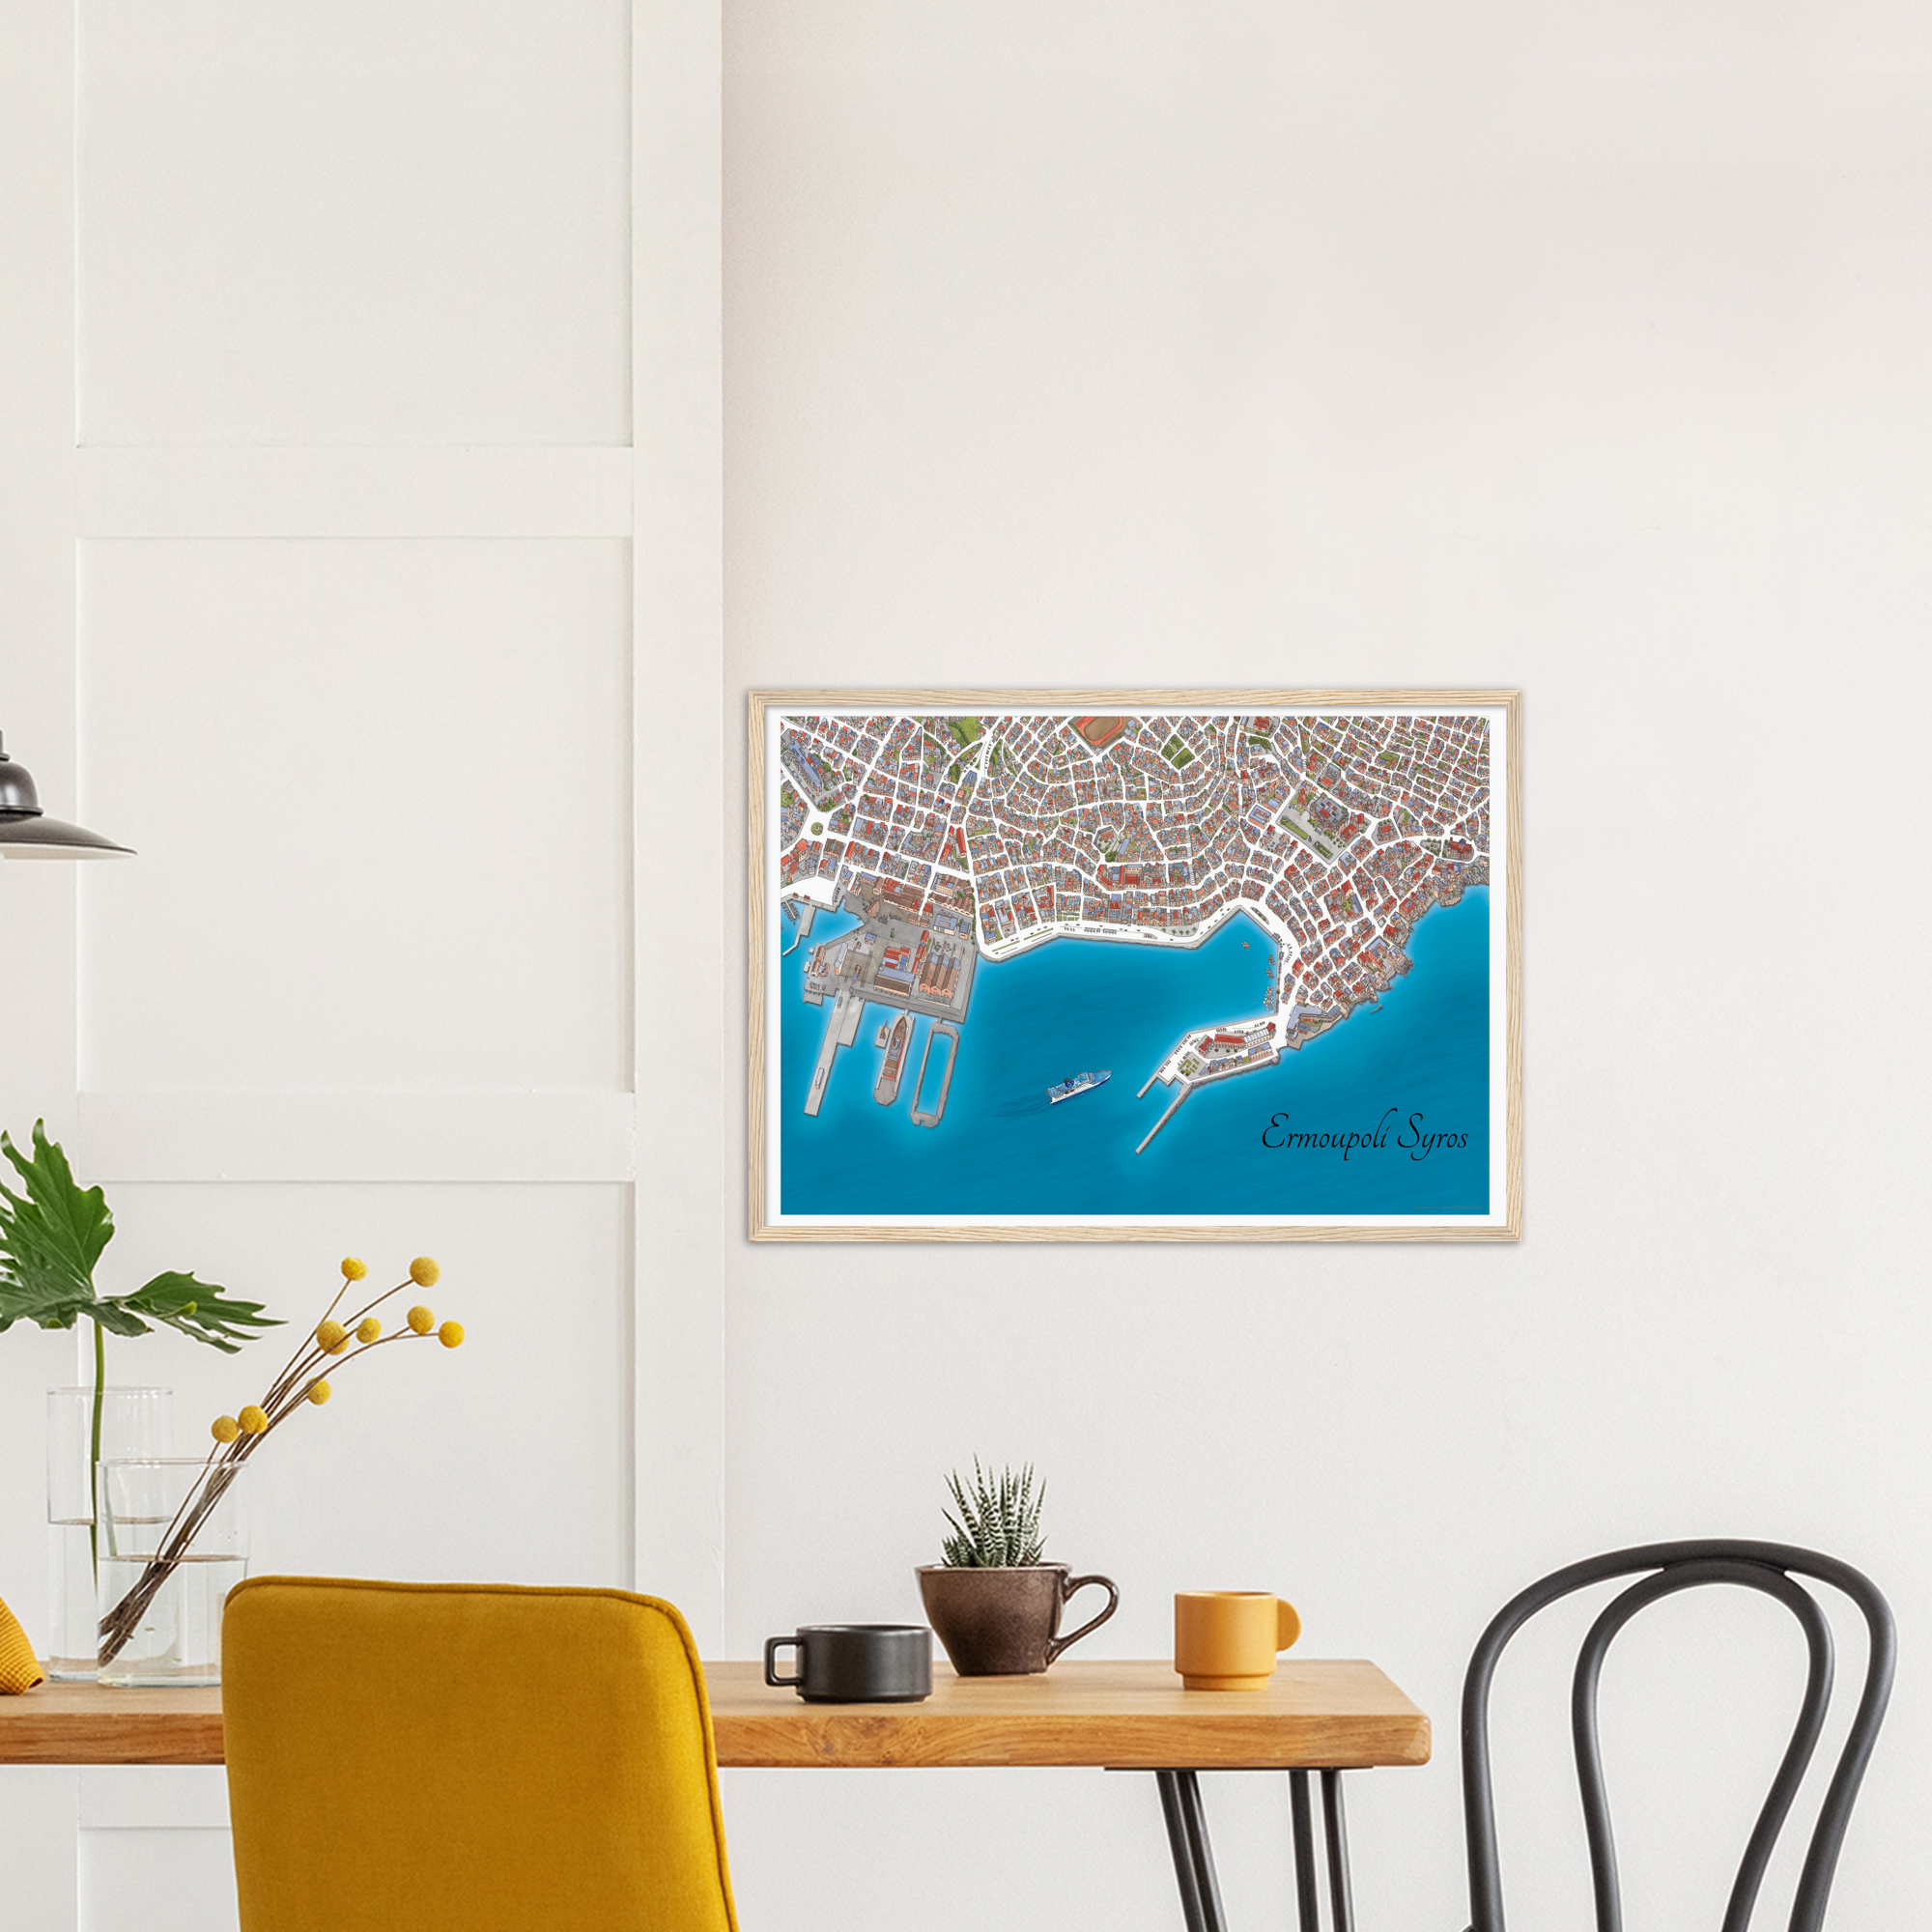 Ermoupoli, Syros, Greece – Color Print – Wooden Framed Poster